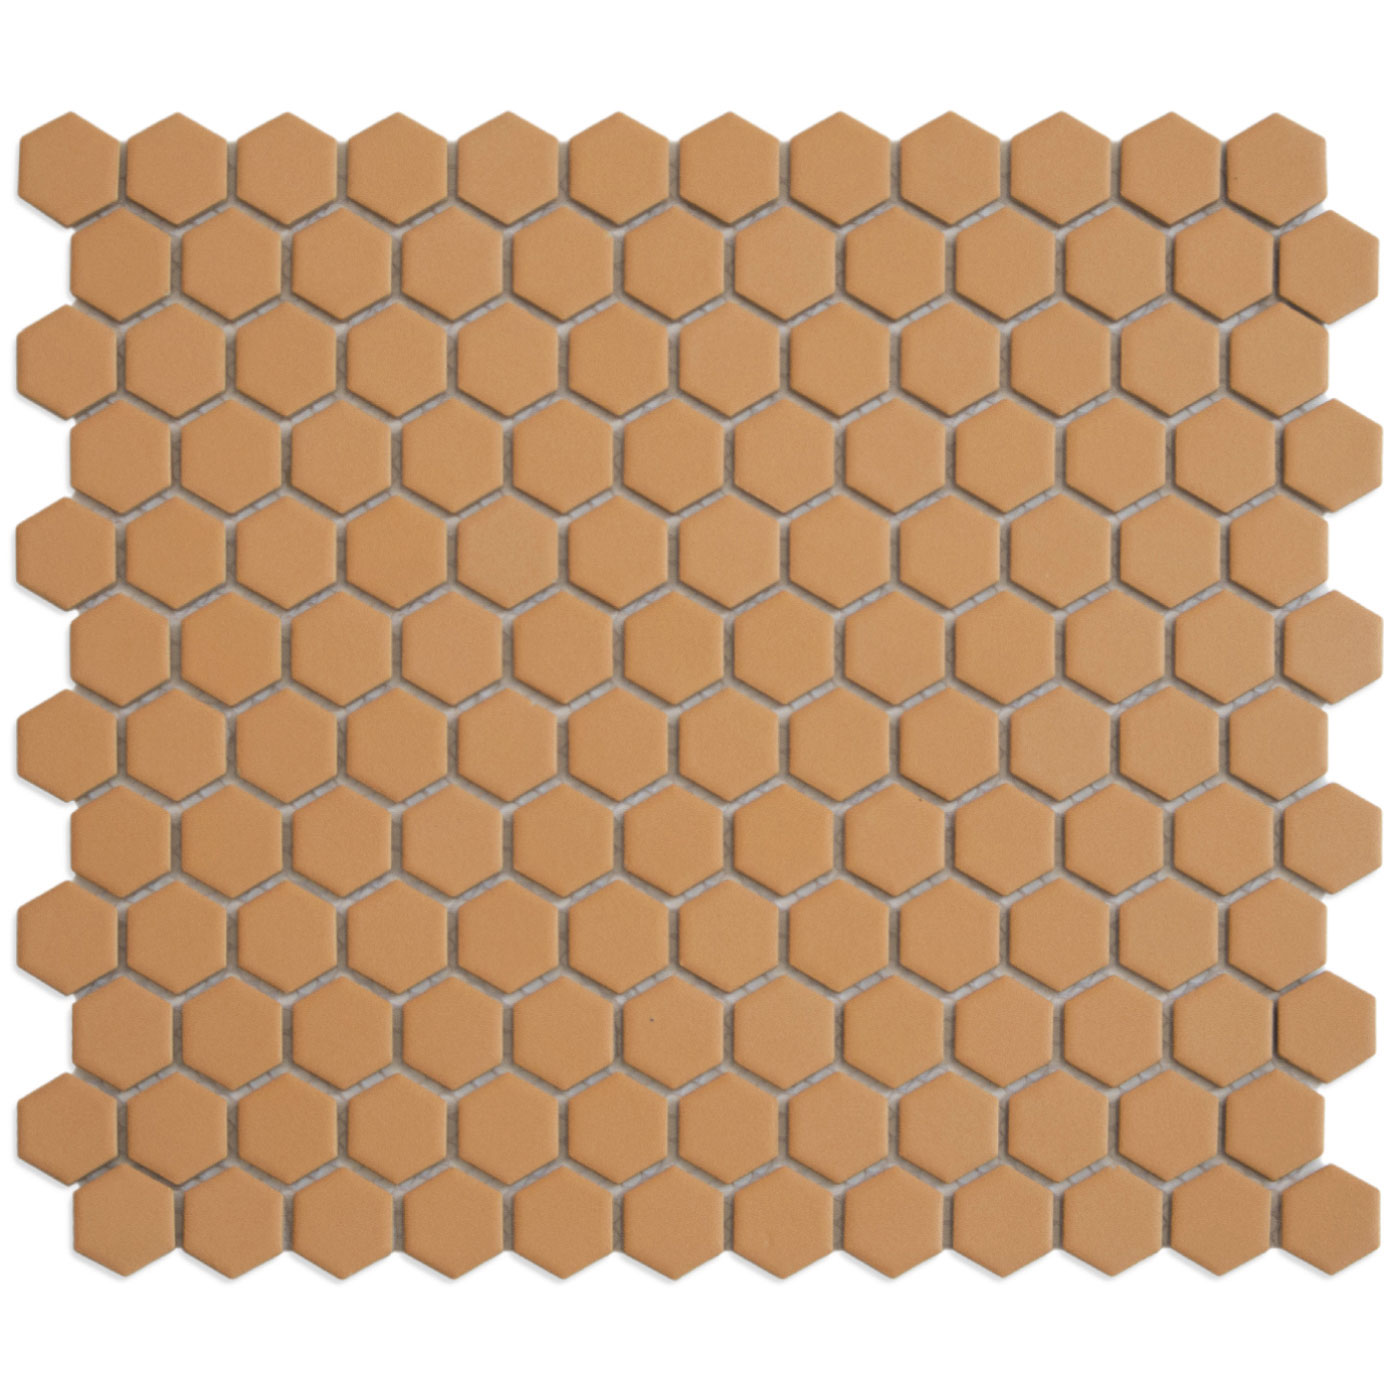 The Mosaic Factory Tegelsample:  Hexagon mozaïek tegels 23x26cm tuscany gold mat